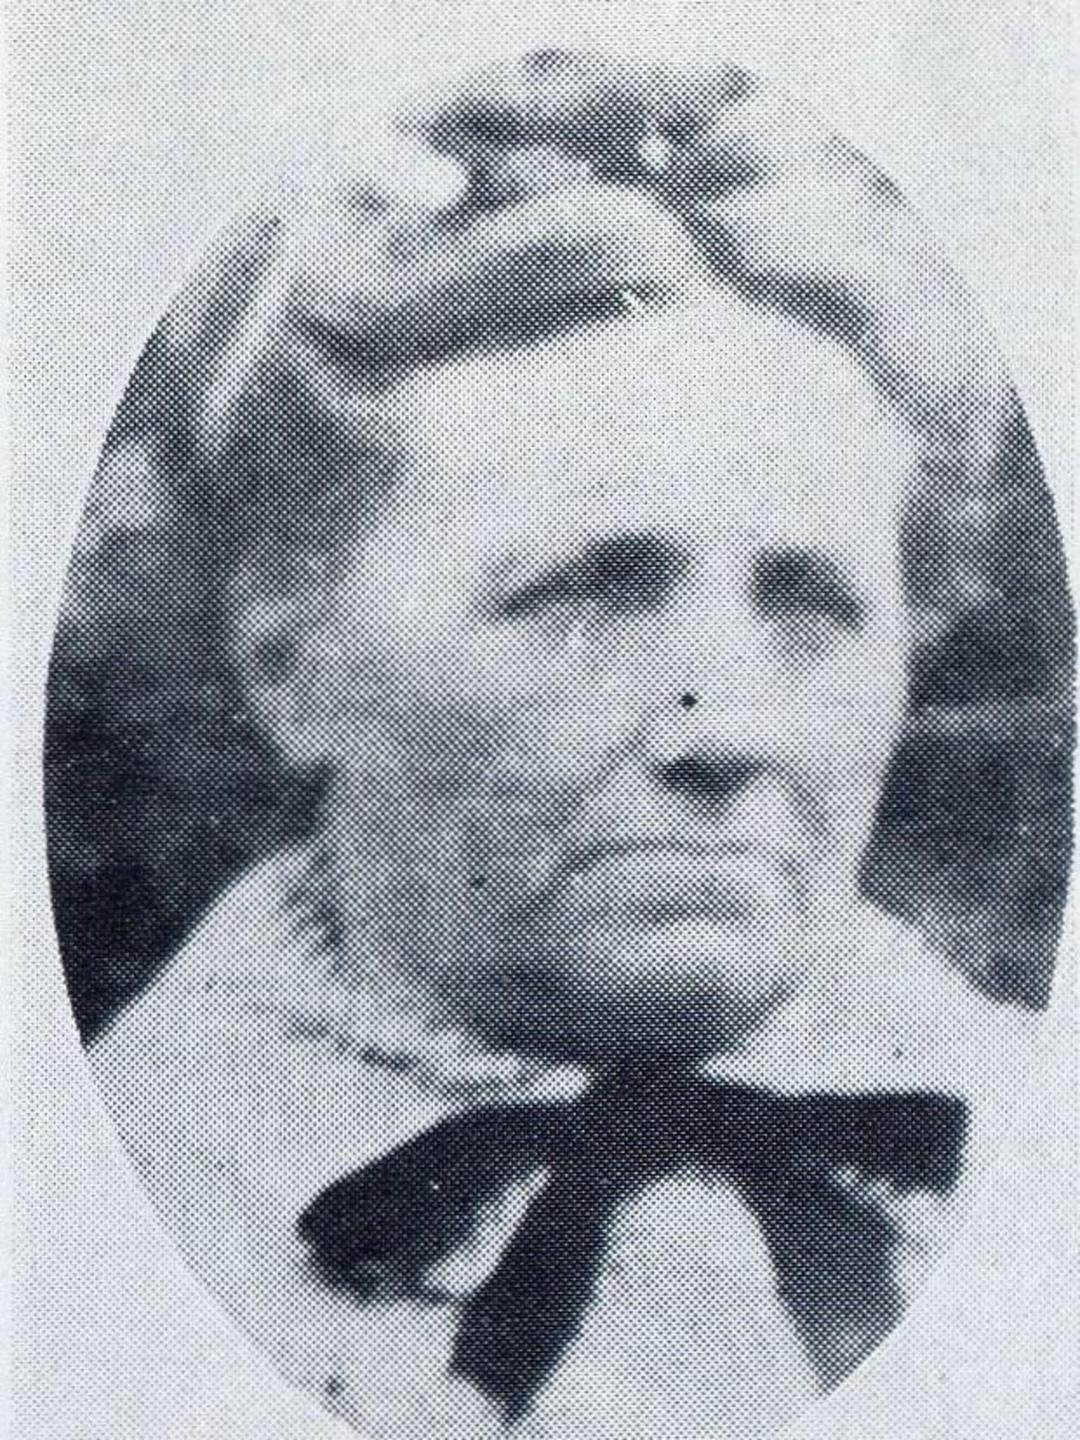 Christina Jacobina Beck (1851 - 1941) Profile